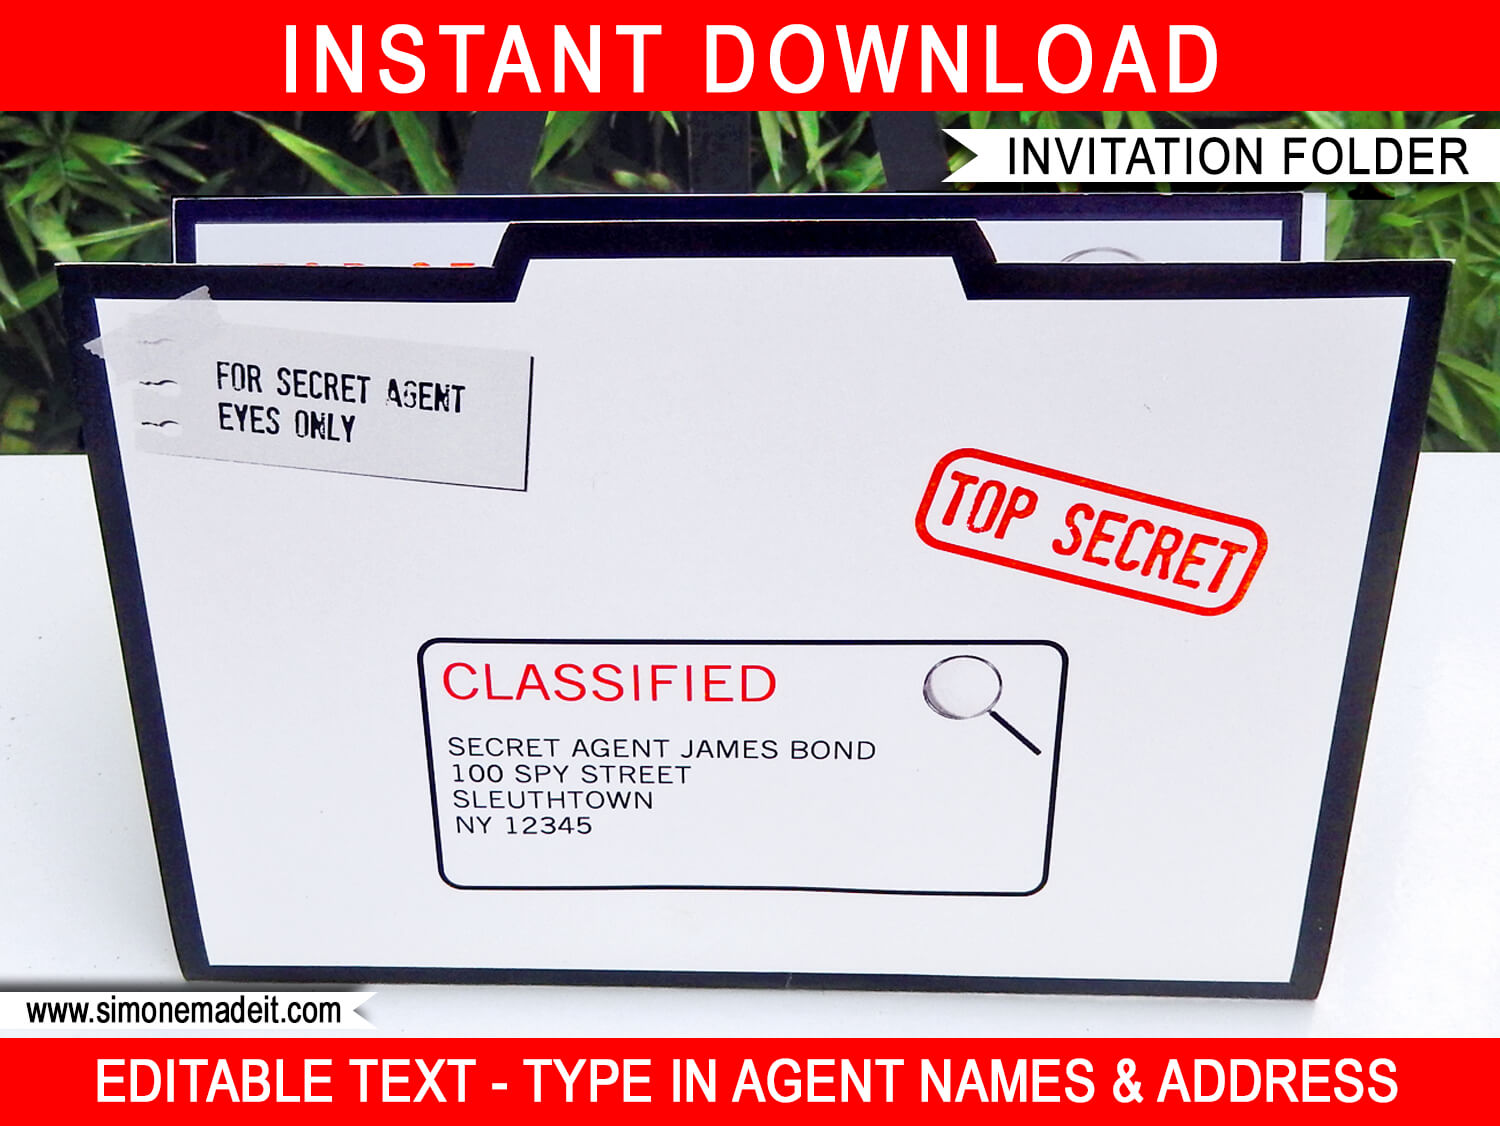 Spy Party Invitation Folder template | Printable Secret Agent Birthday Party Invite Holder | DIY Editable Text  | INSTANT DOWNLOAD $3.50  via SIMONEmadeit.com